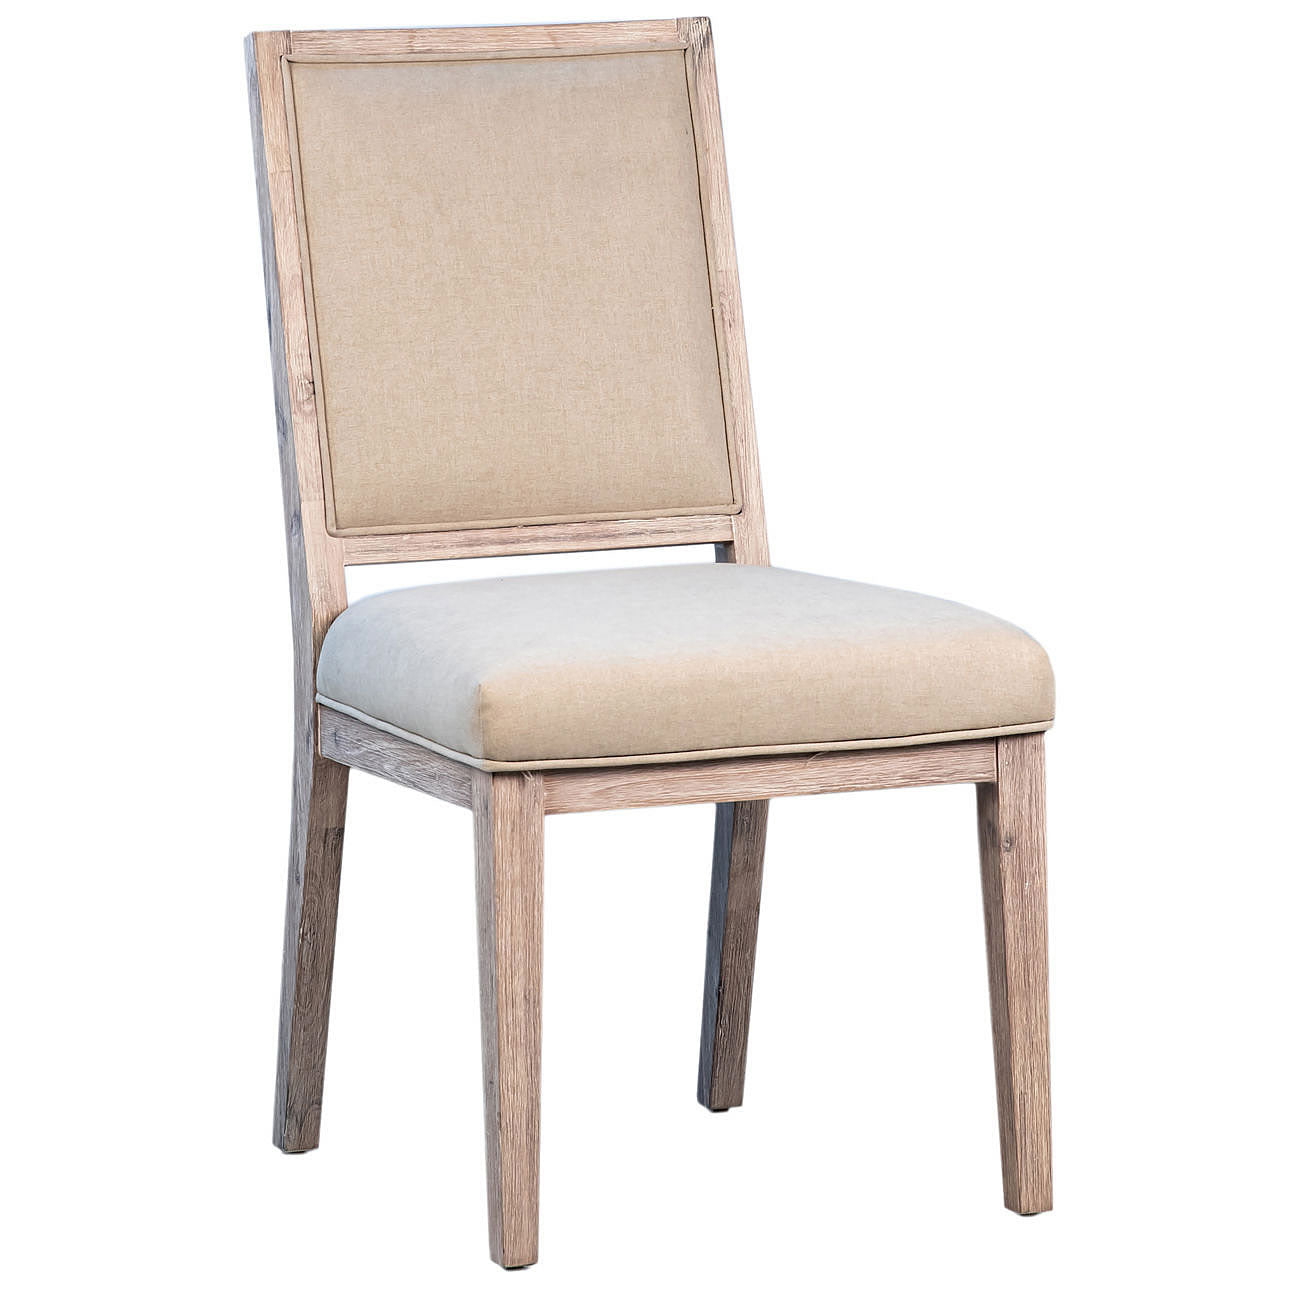 soho-leather-side-chair-in-havana